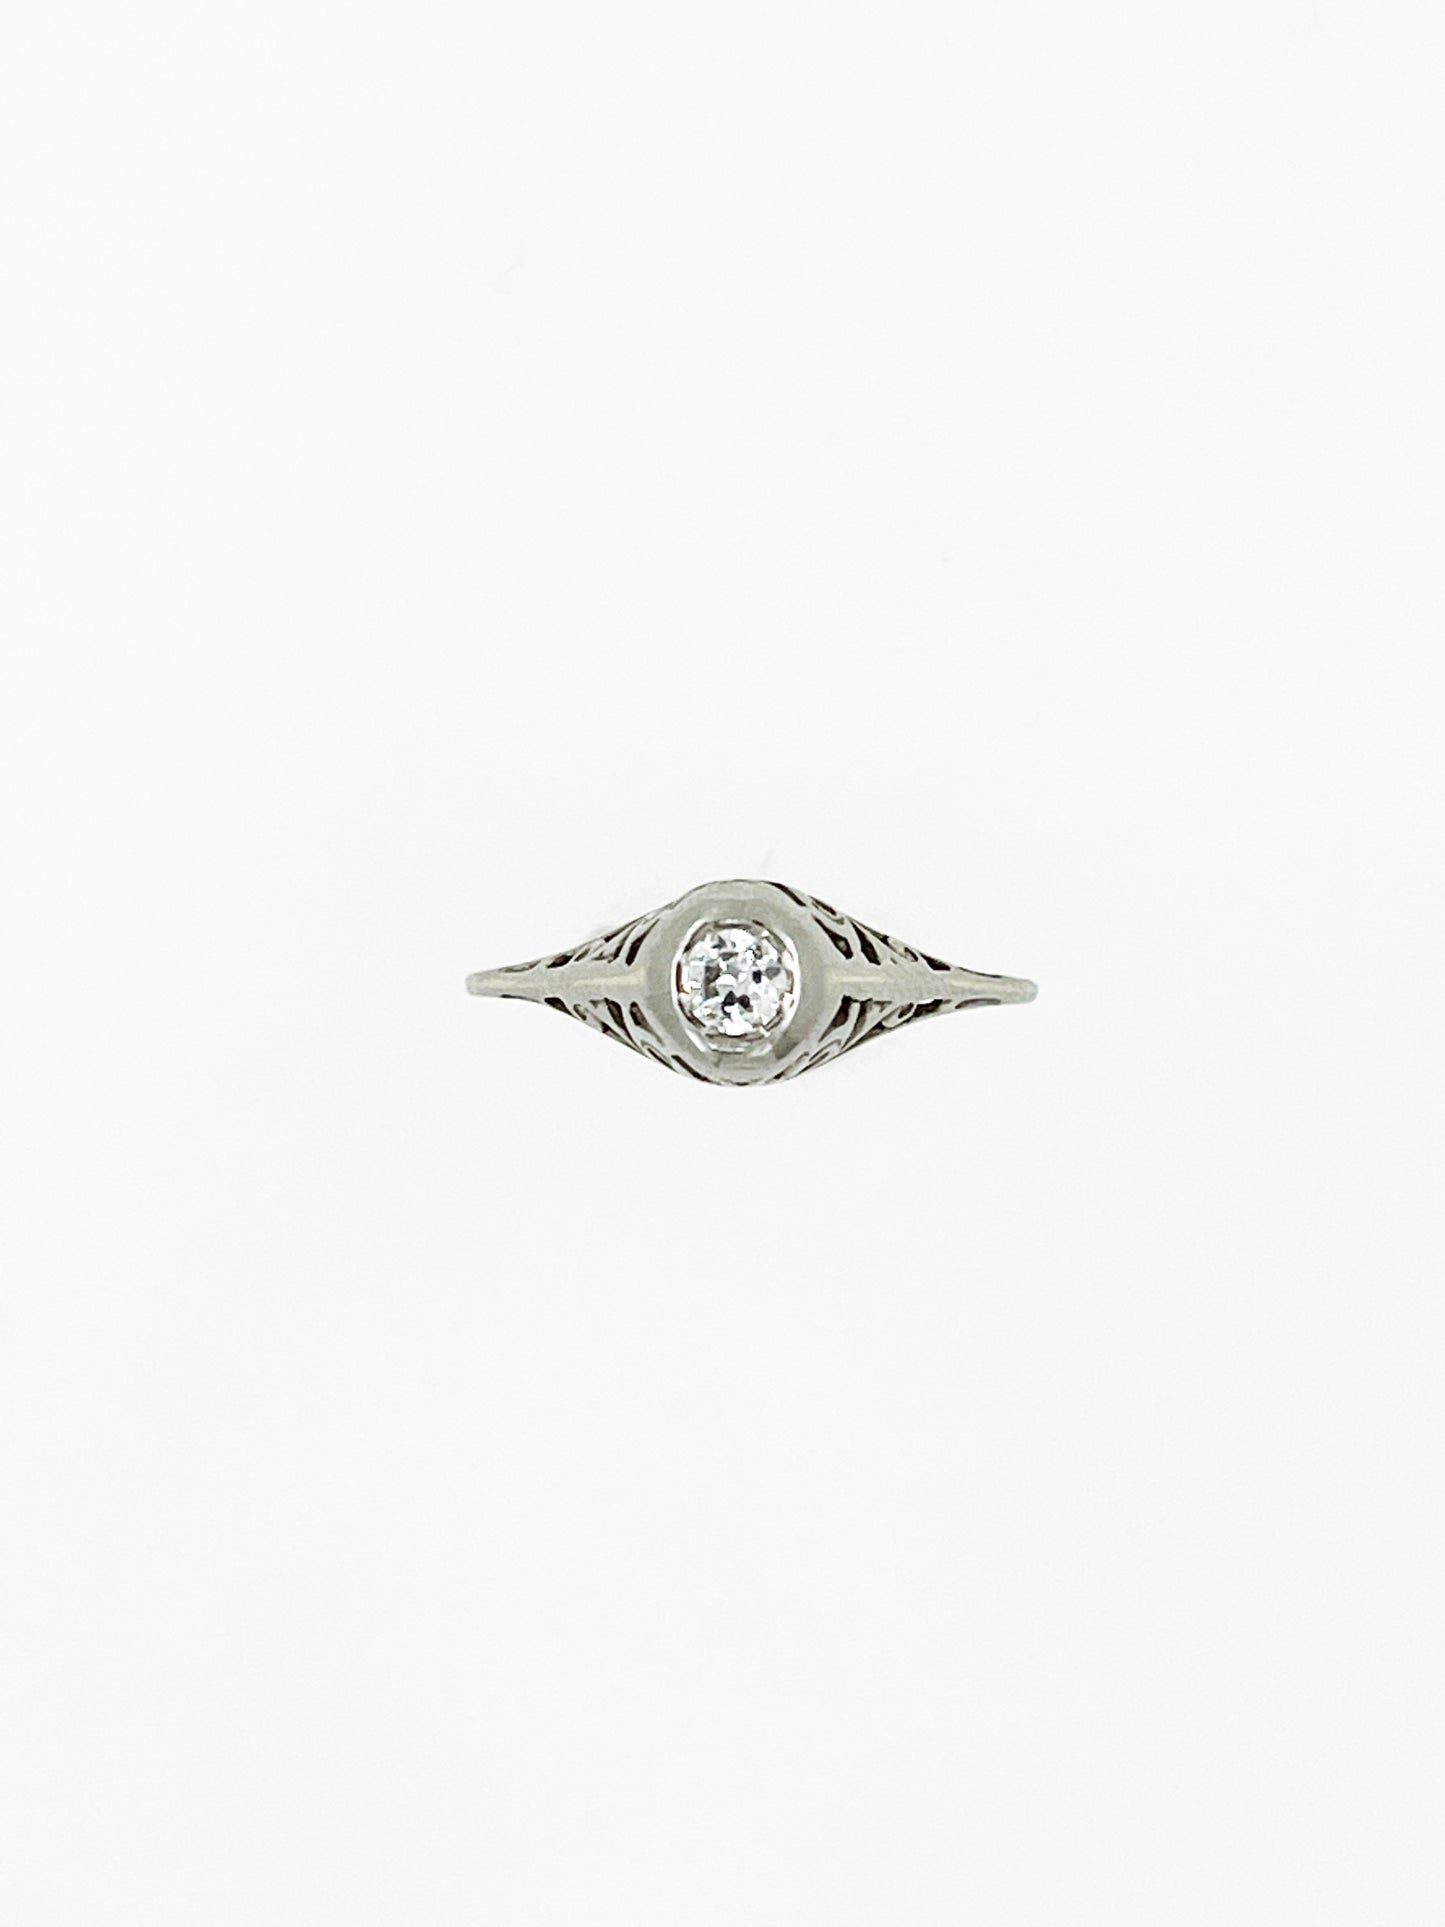 .16 Carat Art Deco Filigree Ring in 14k White Gold